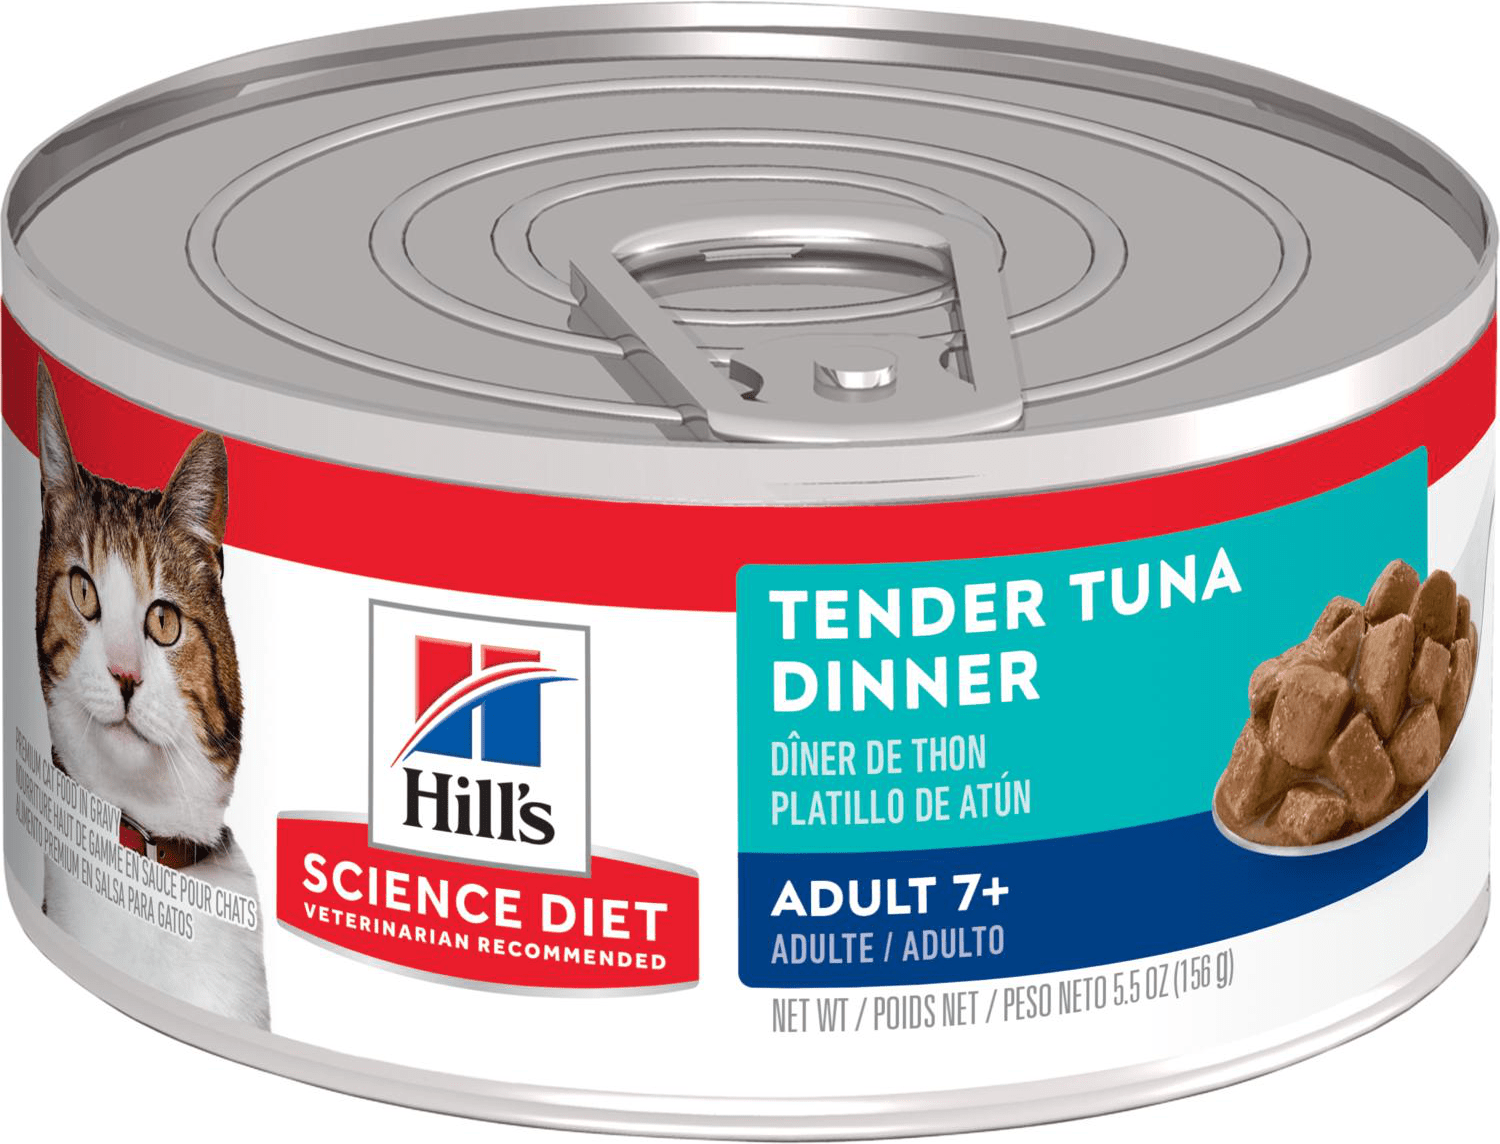 Hill's Science Diet Adult 7+ Tender Tuna Dinner